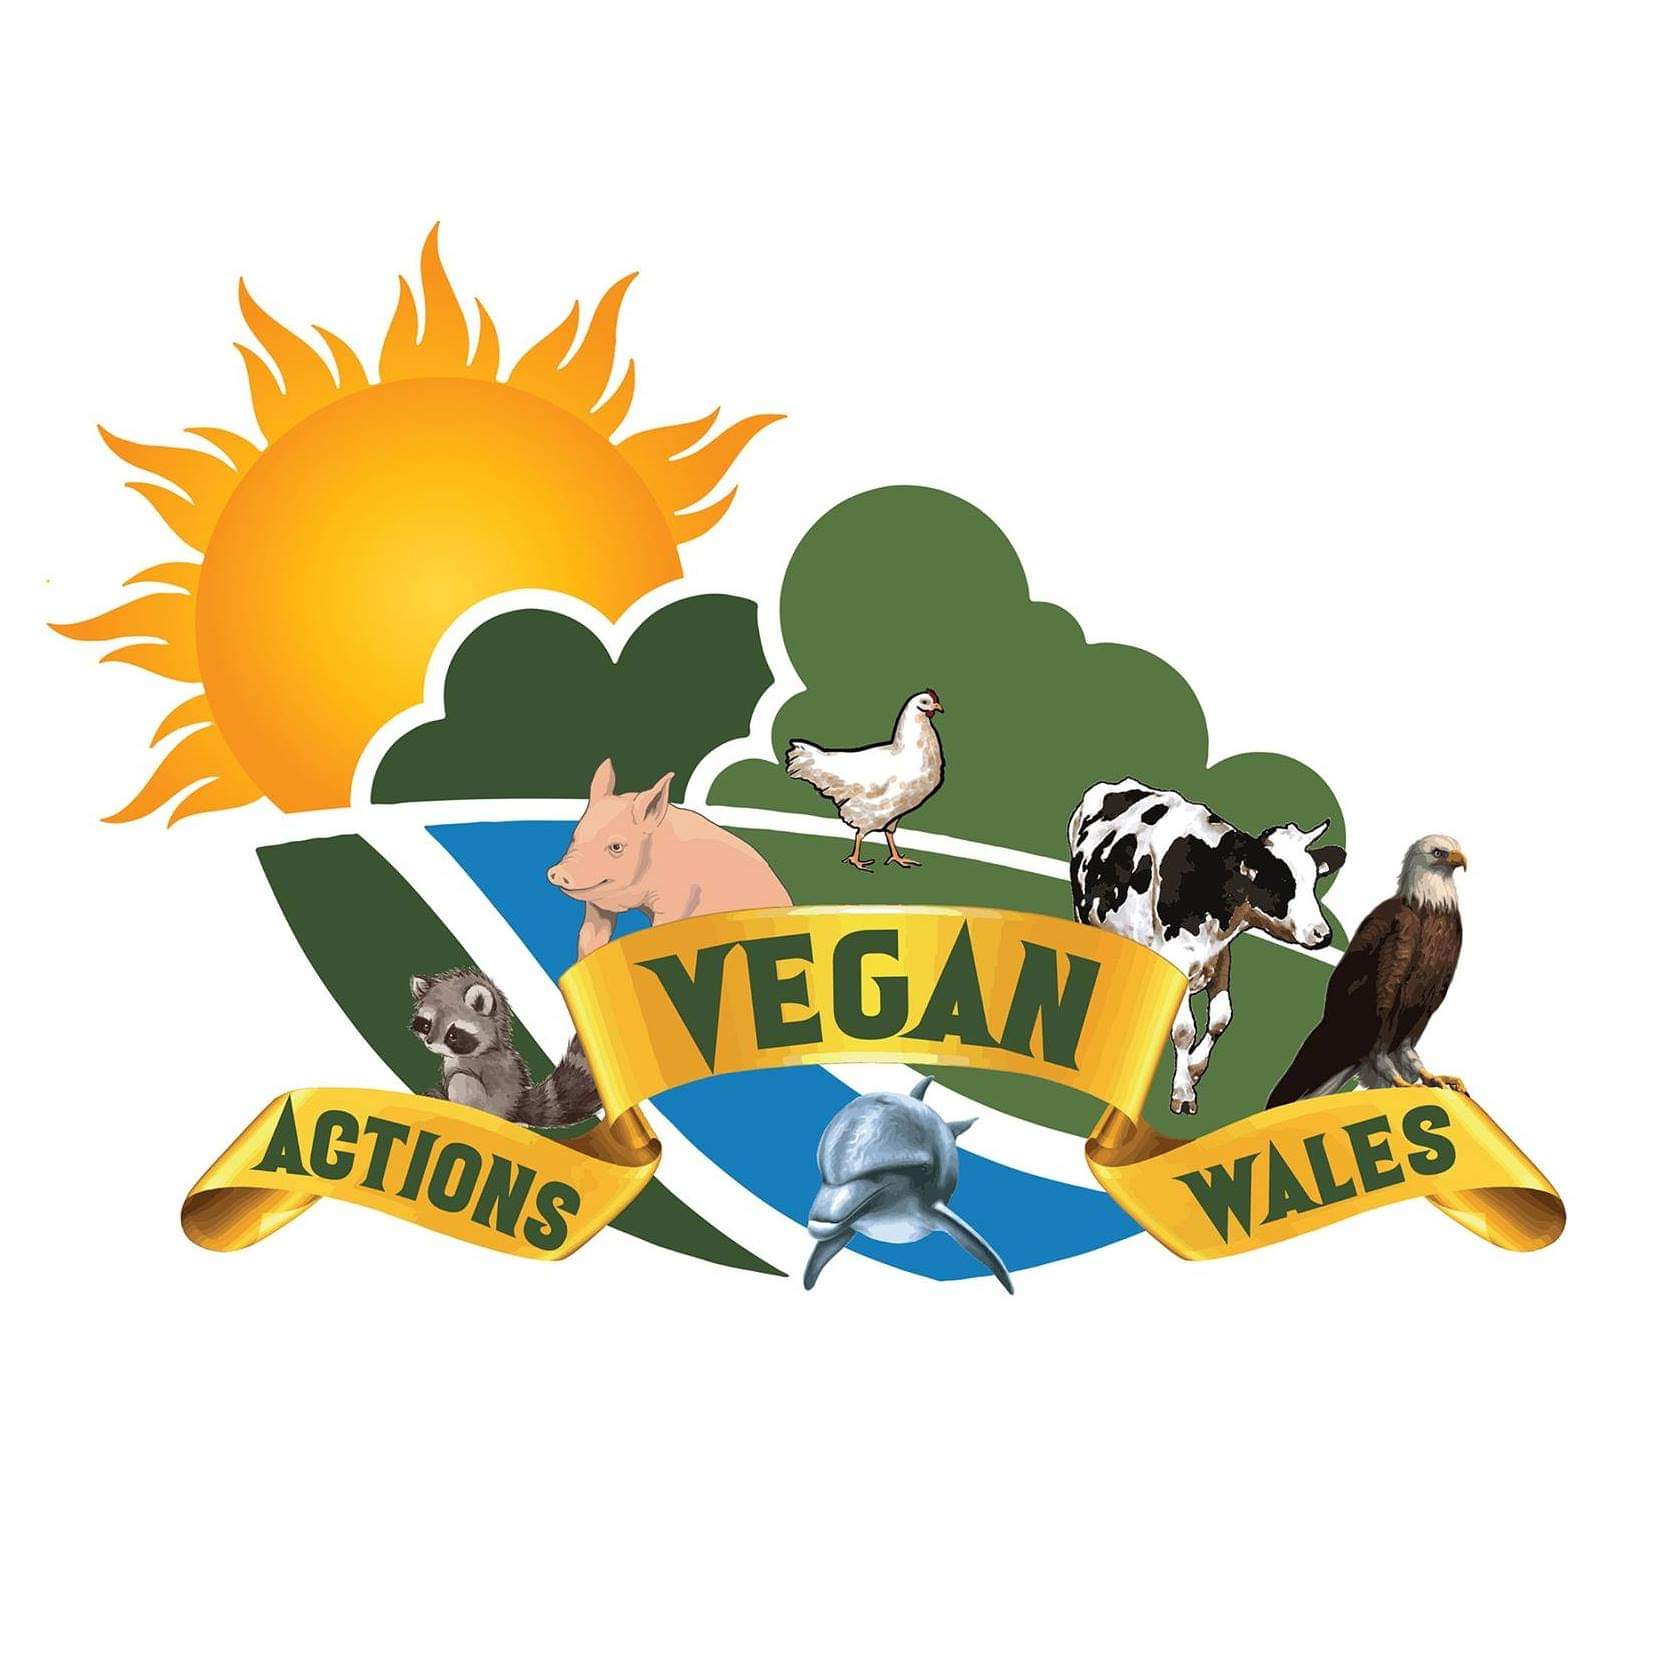 Vegan Actions Wales logo